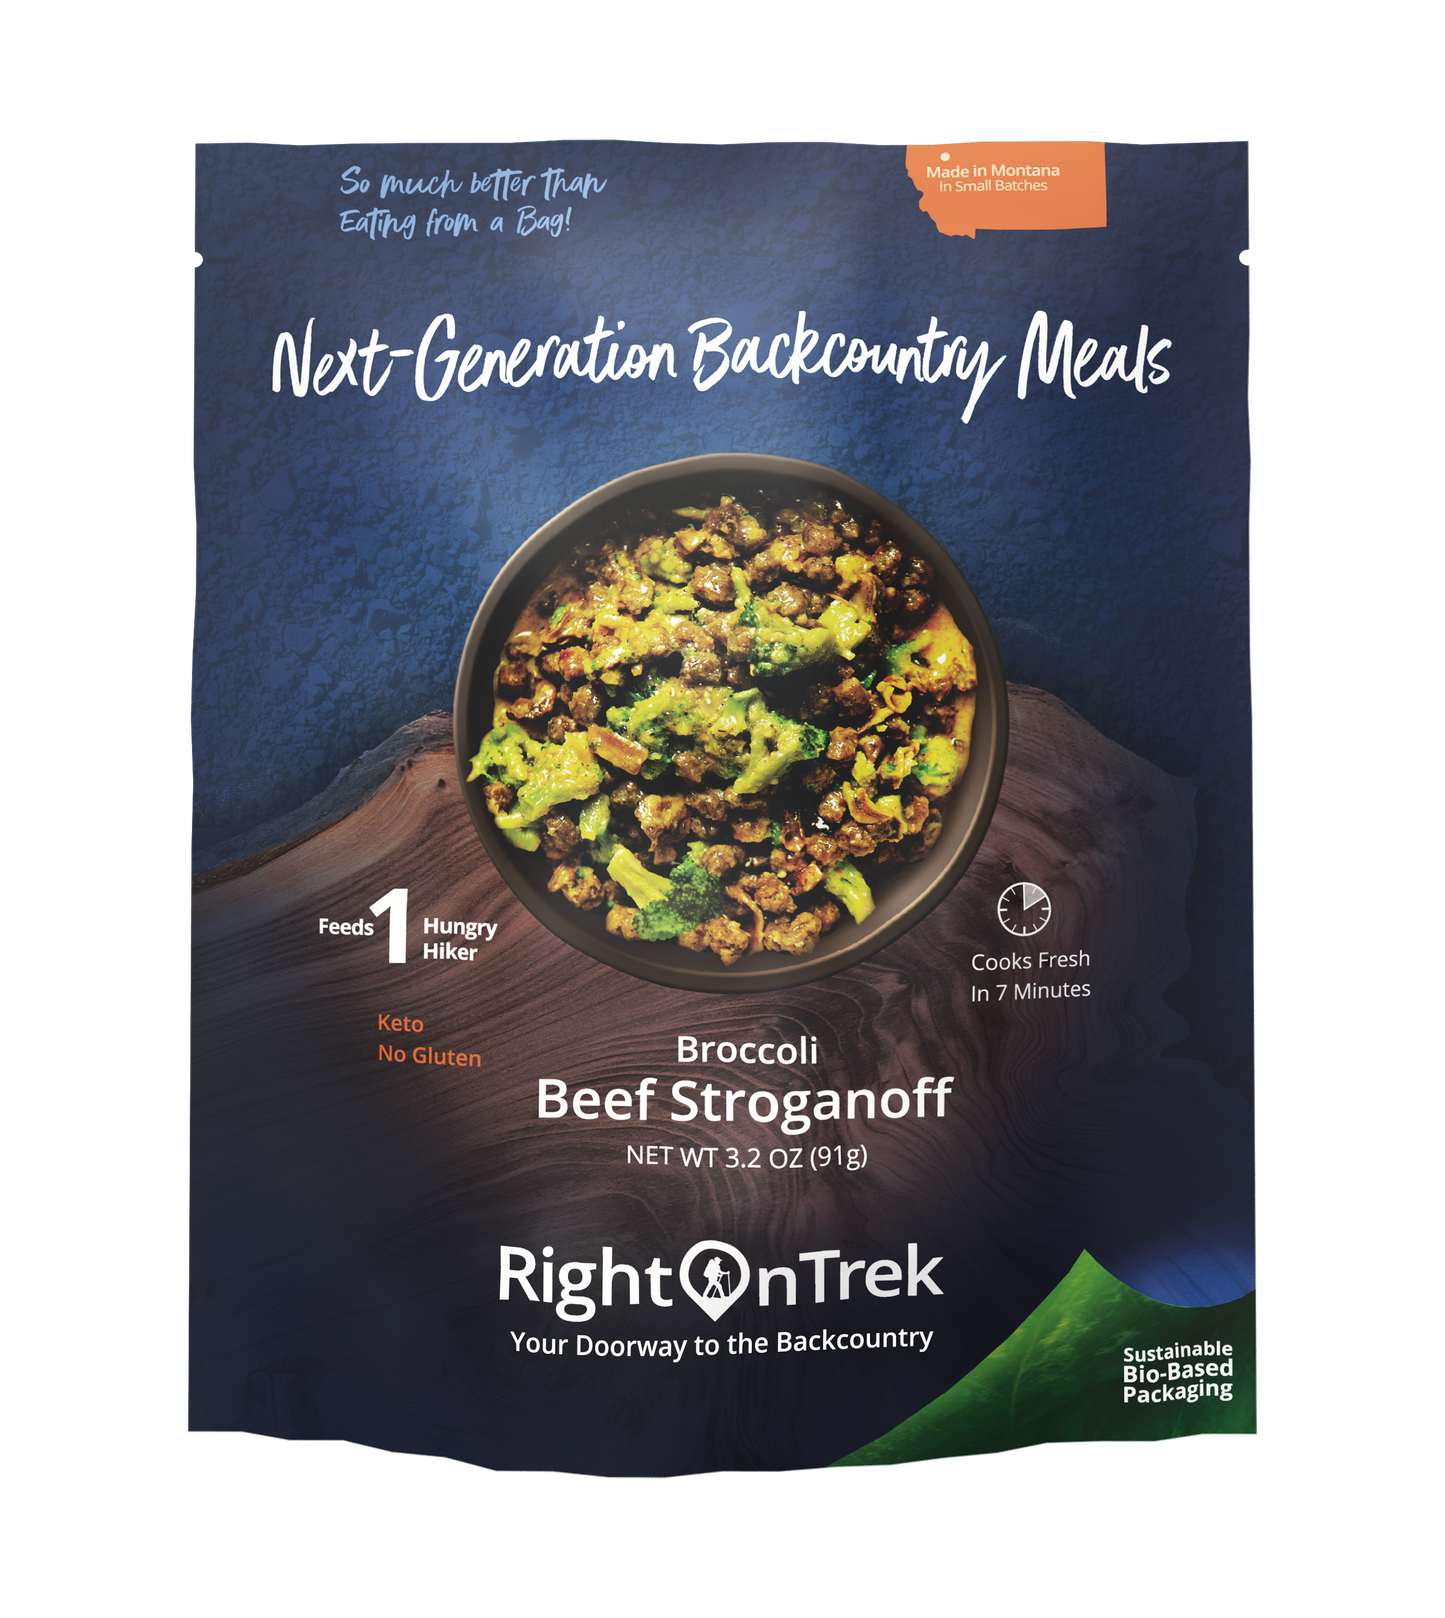 RightOnTrek broccoli beef stroganoff feeds 1 person